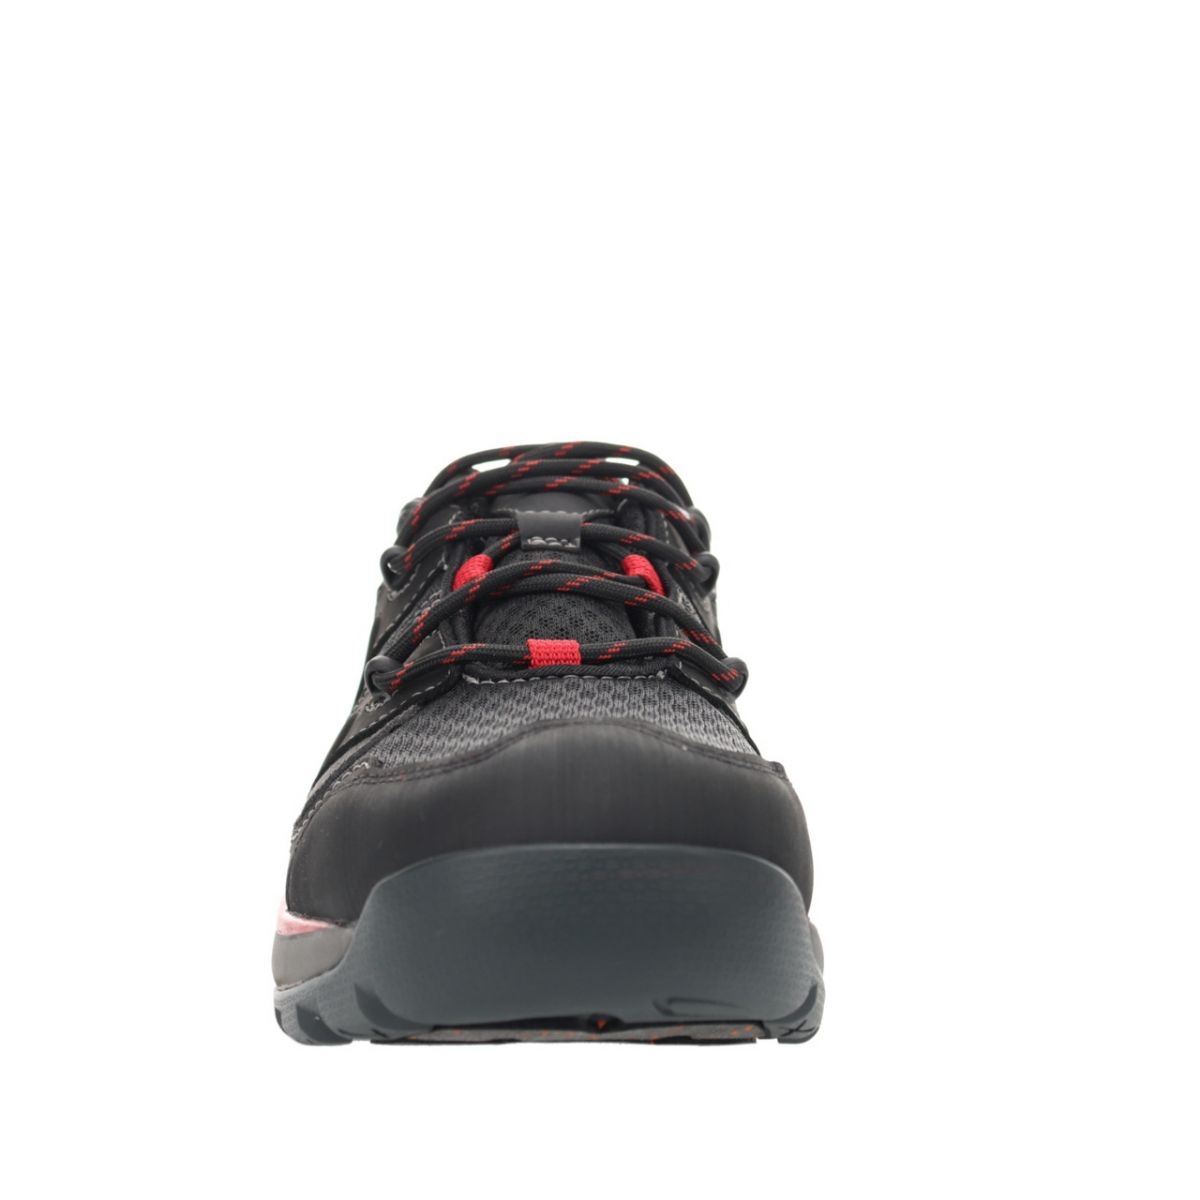 Propet Men's Vercors Hiking Shoe Black/Red - MOA002SBRD BLACK/RED - BLACK/RED, 10 XX-Wide